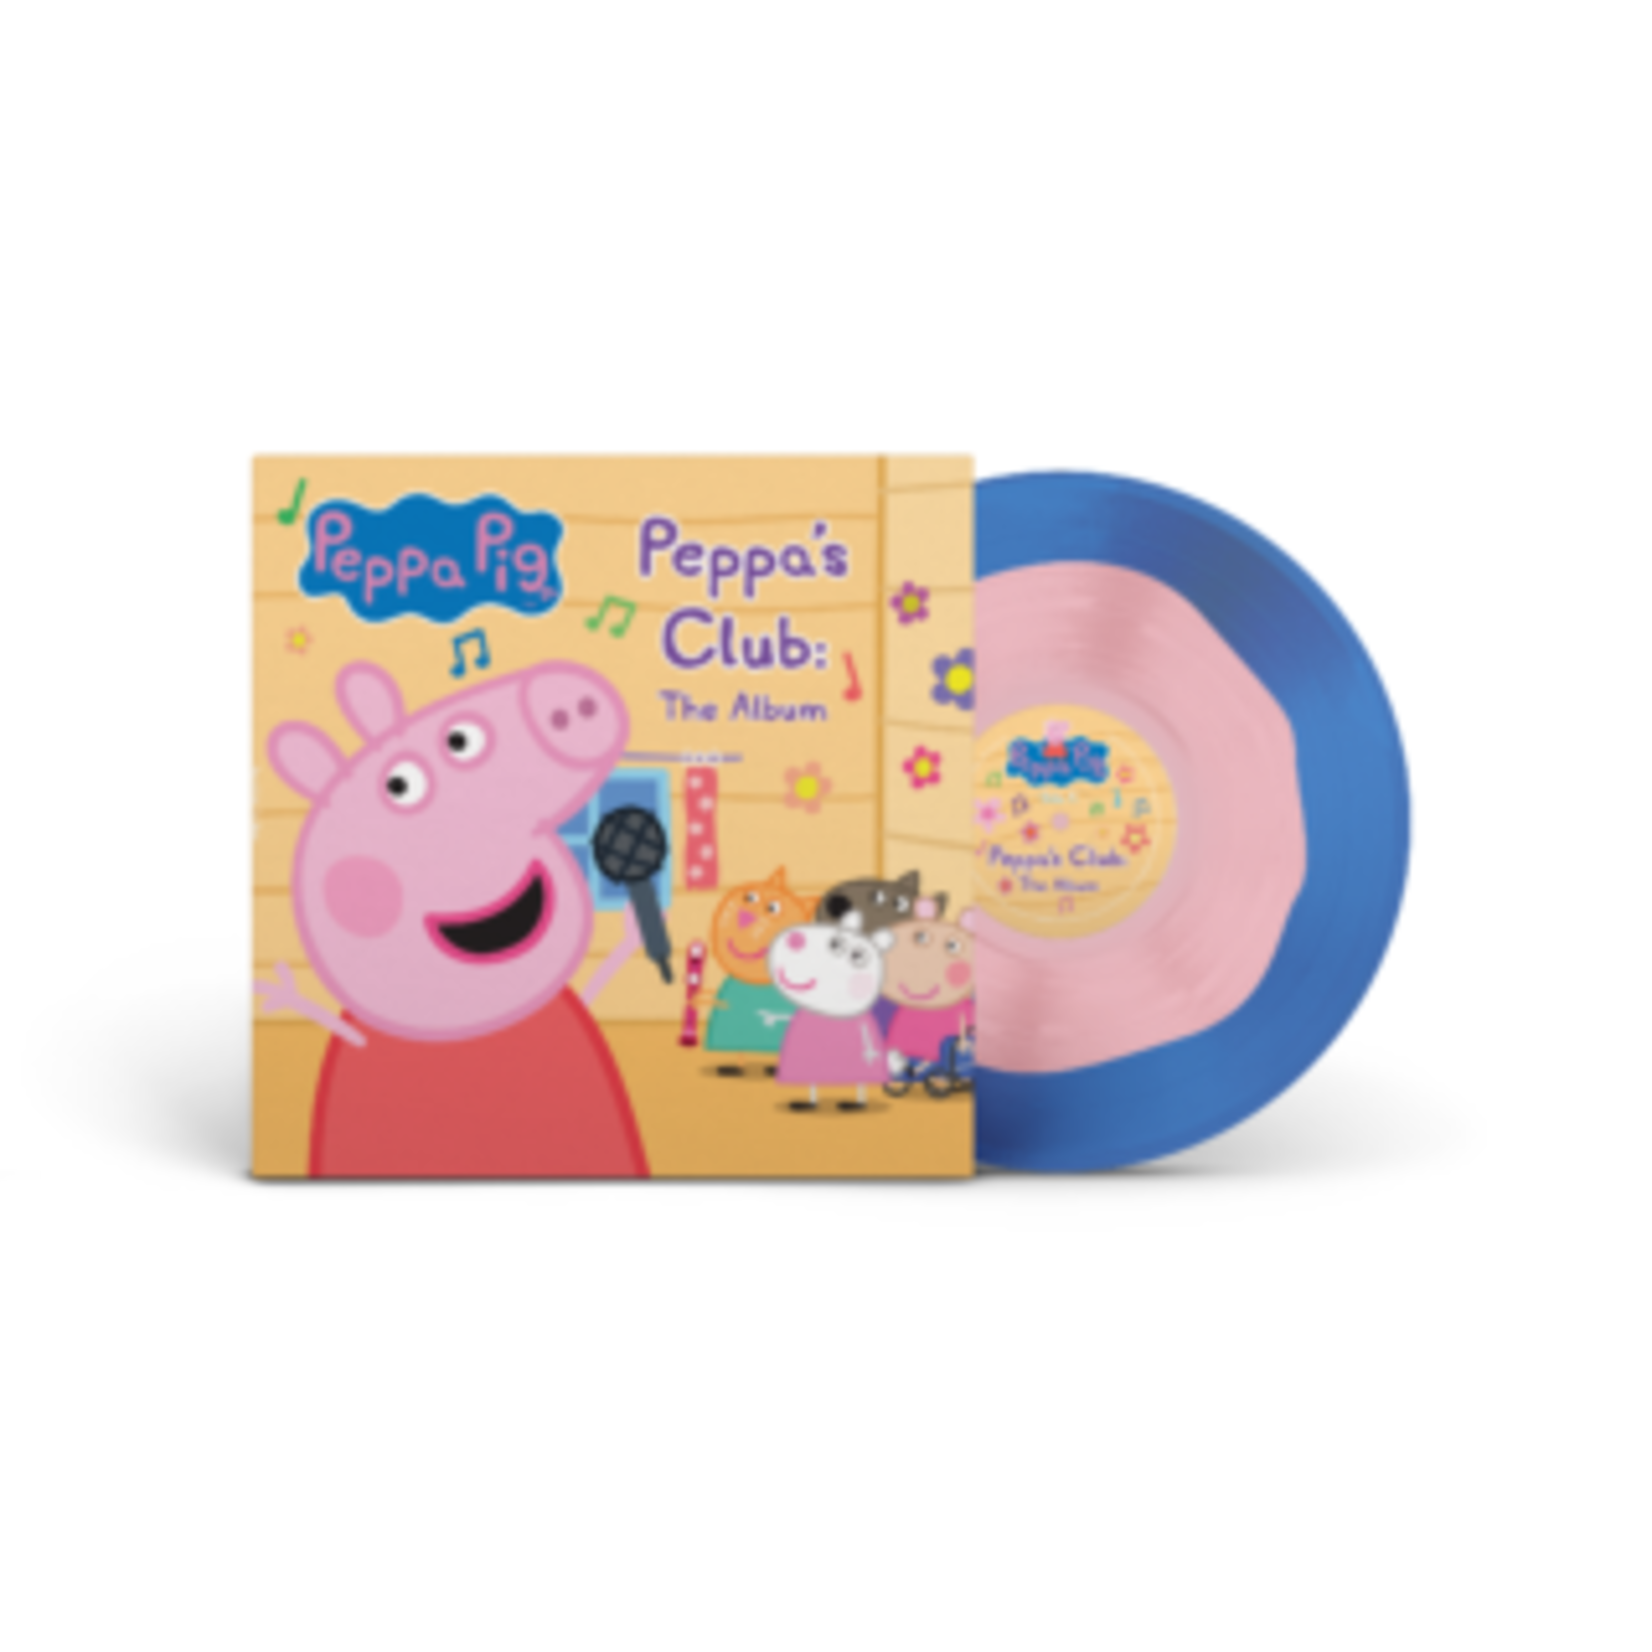 Peppa Pig - Peppa's Club: The Album (Pink/Blue Vinyl) [LP] (RSD2023)